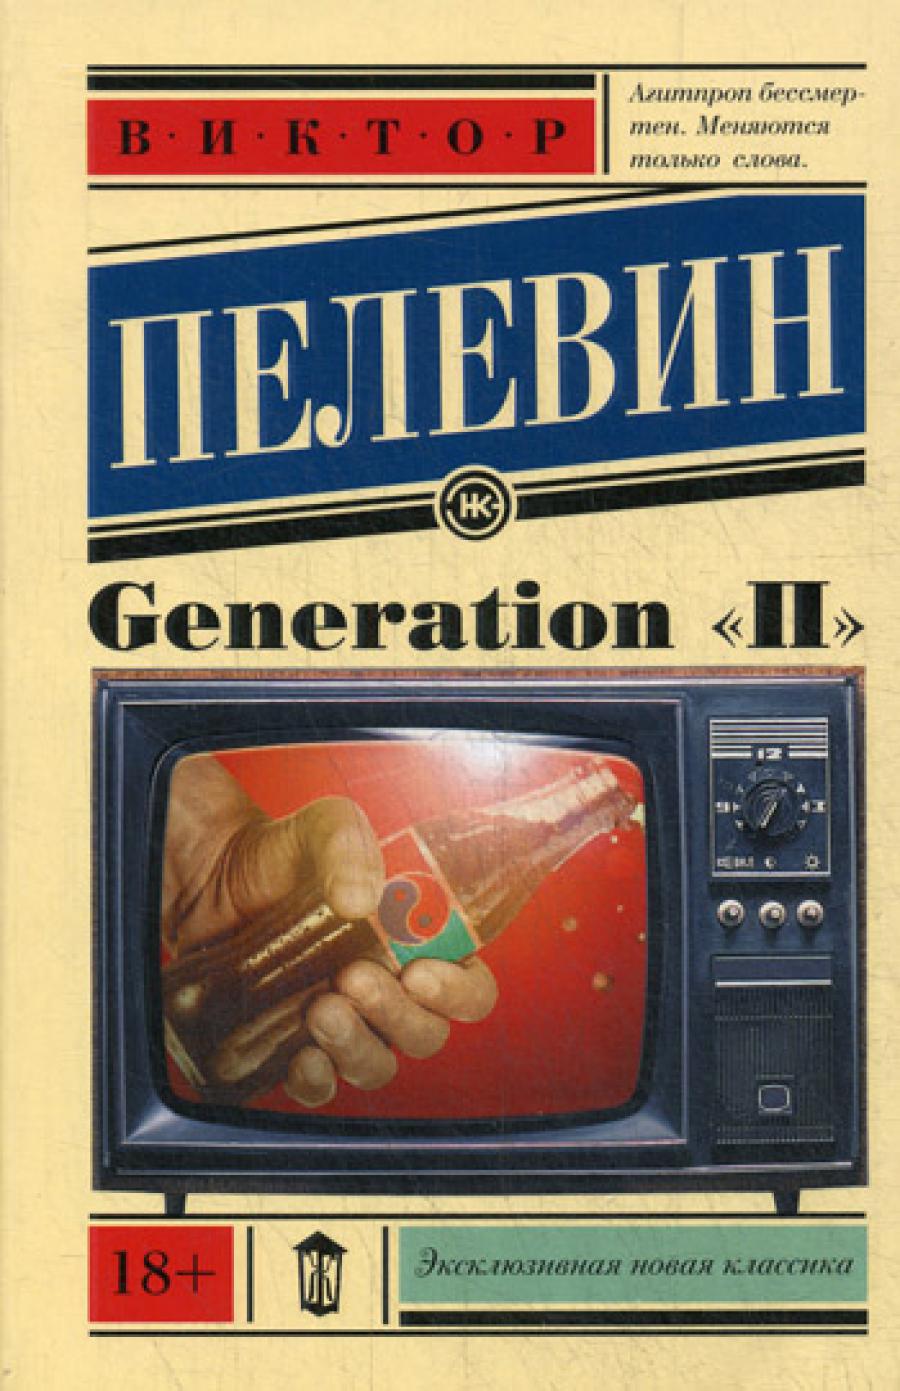 Generation ""